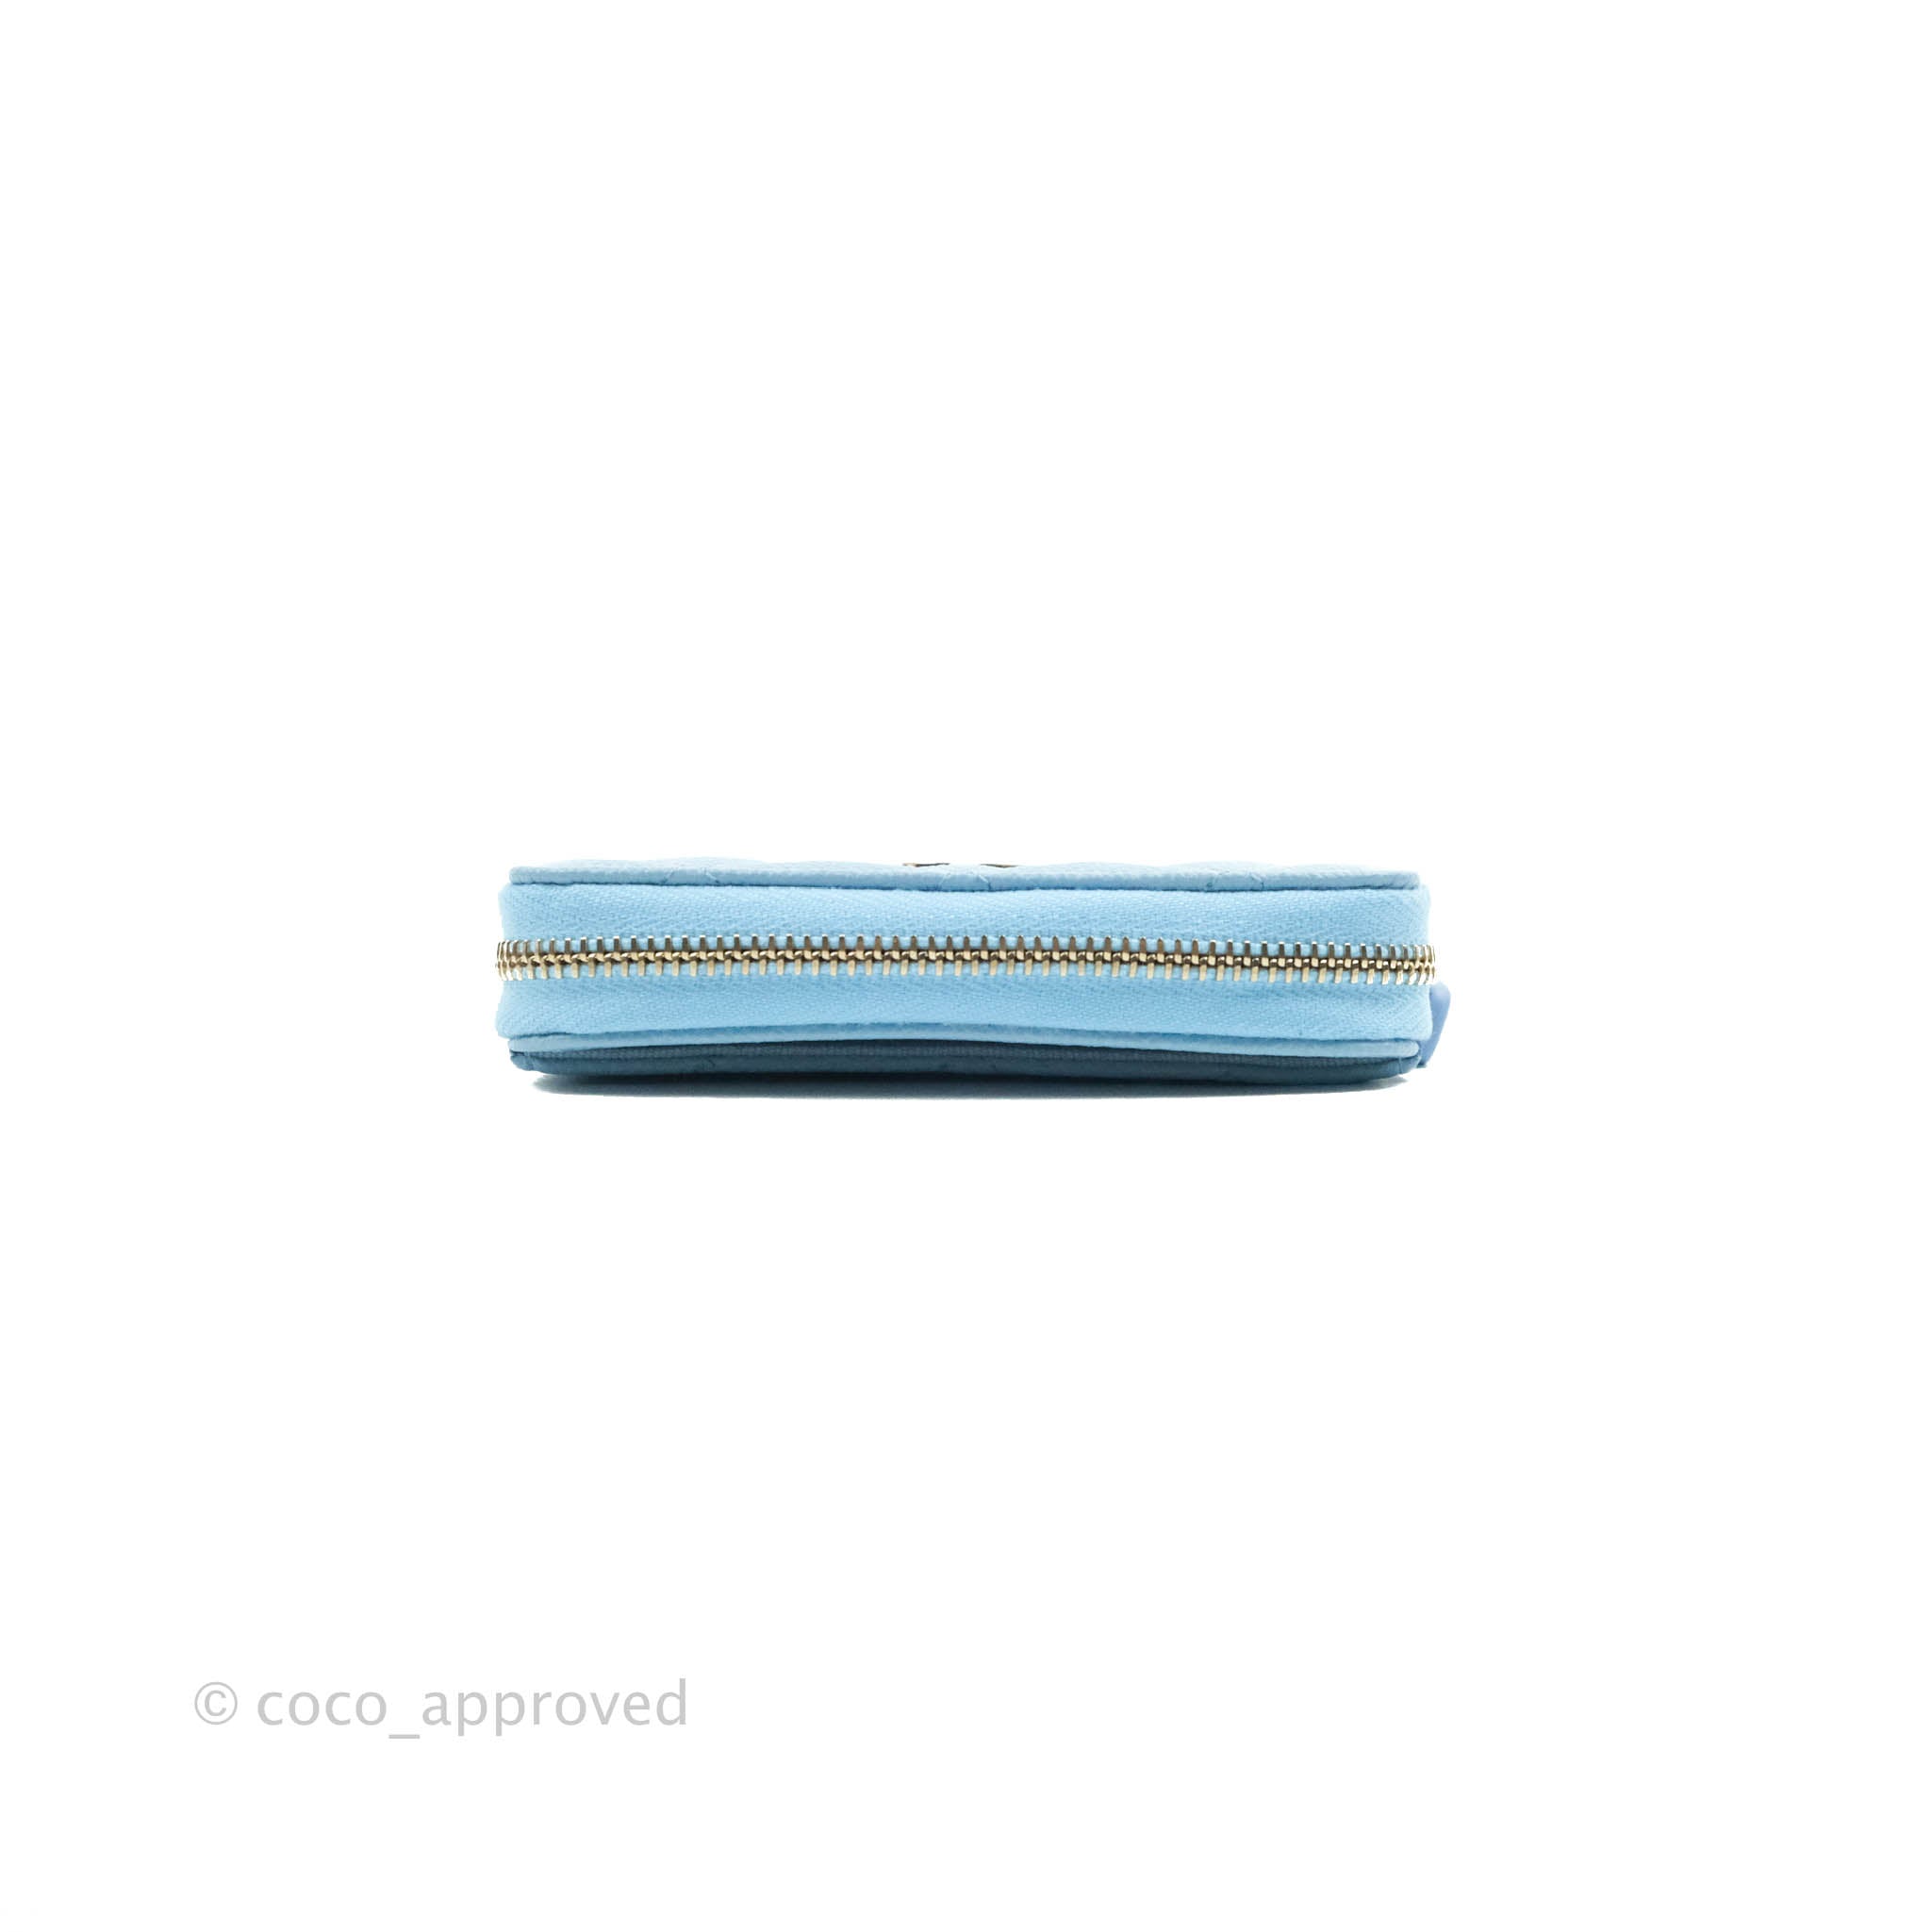 CHANEL Caviar Quilted Medium Zip Around Wallet Light Blue 650304